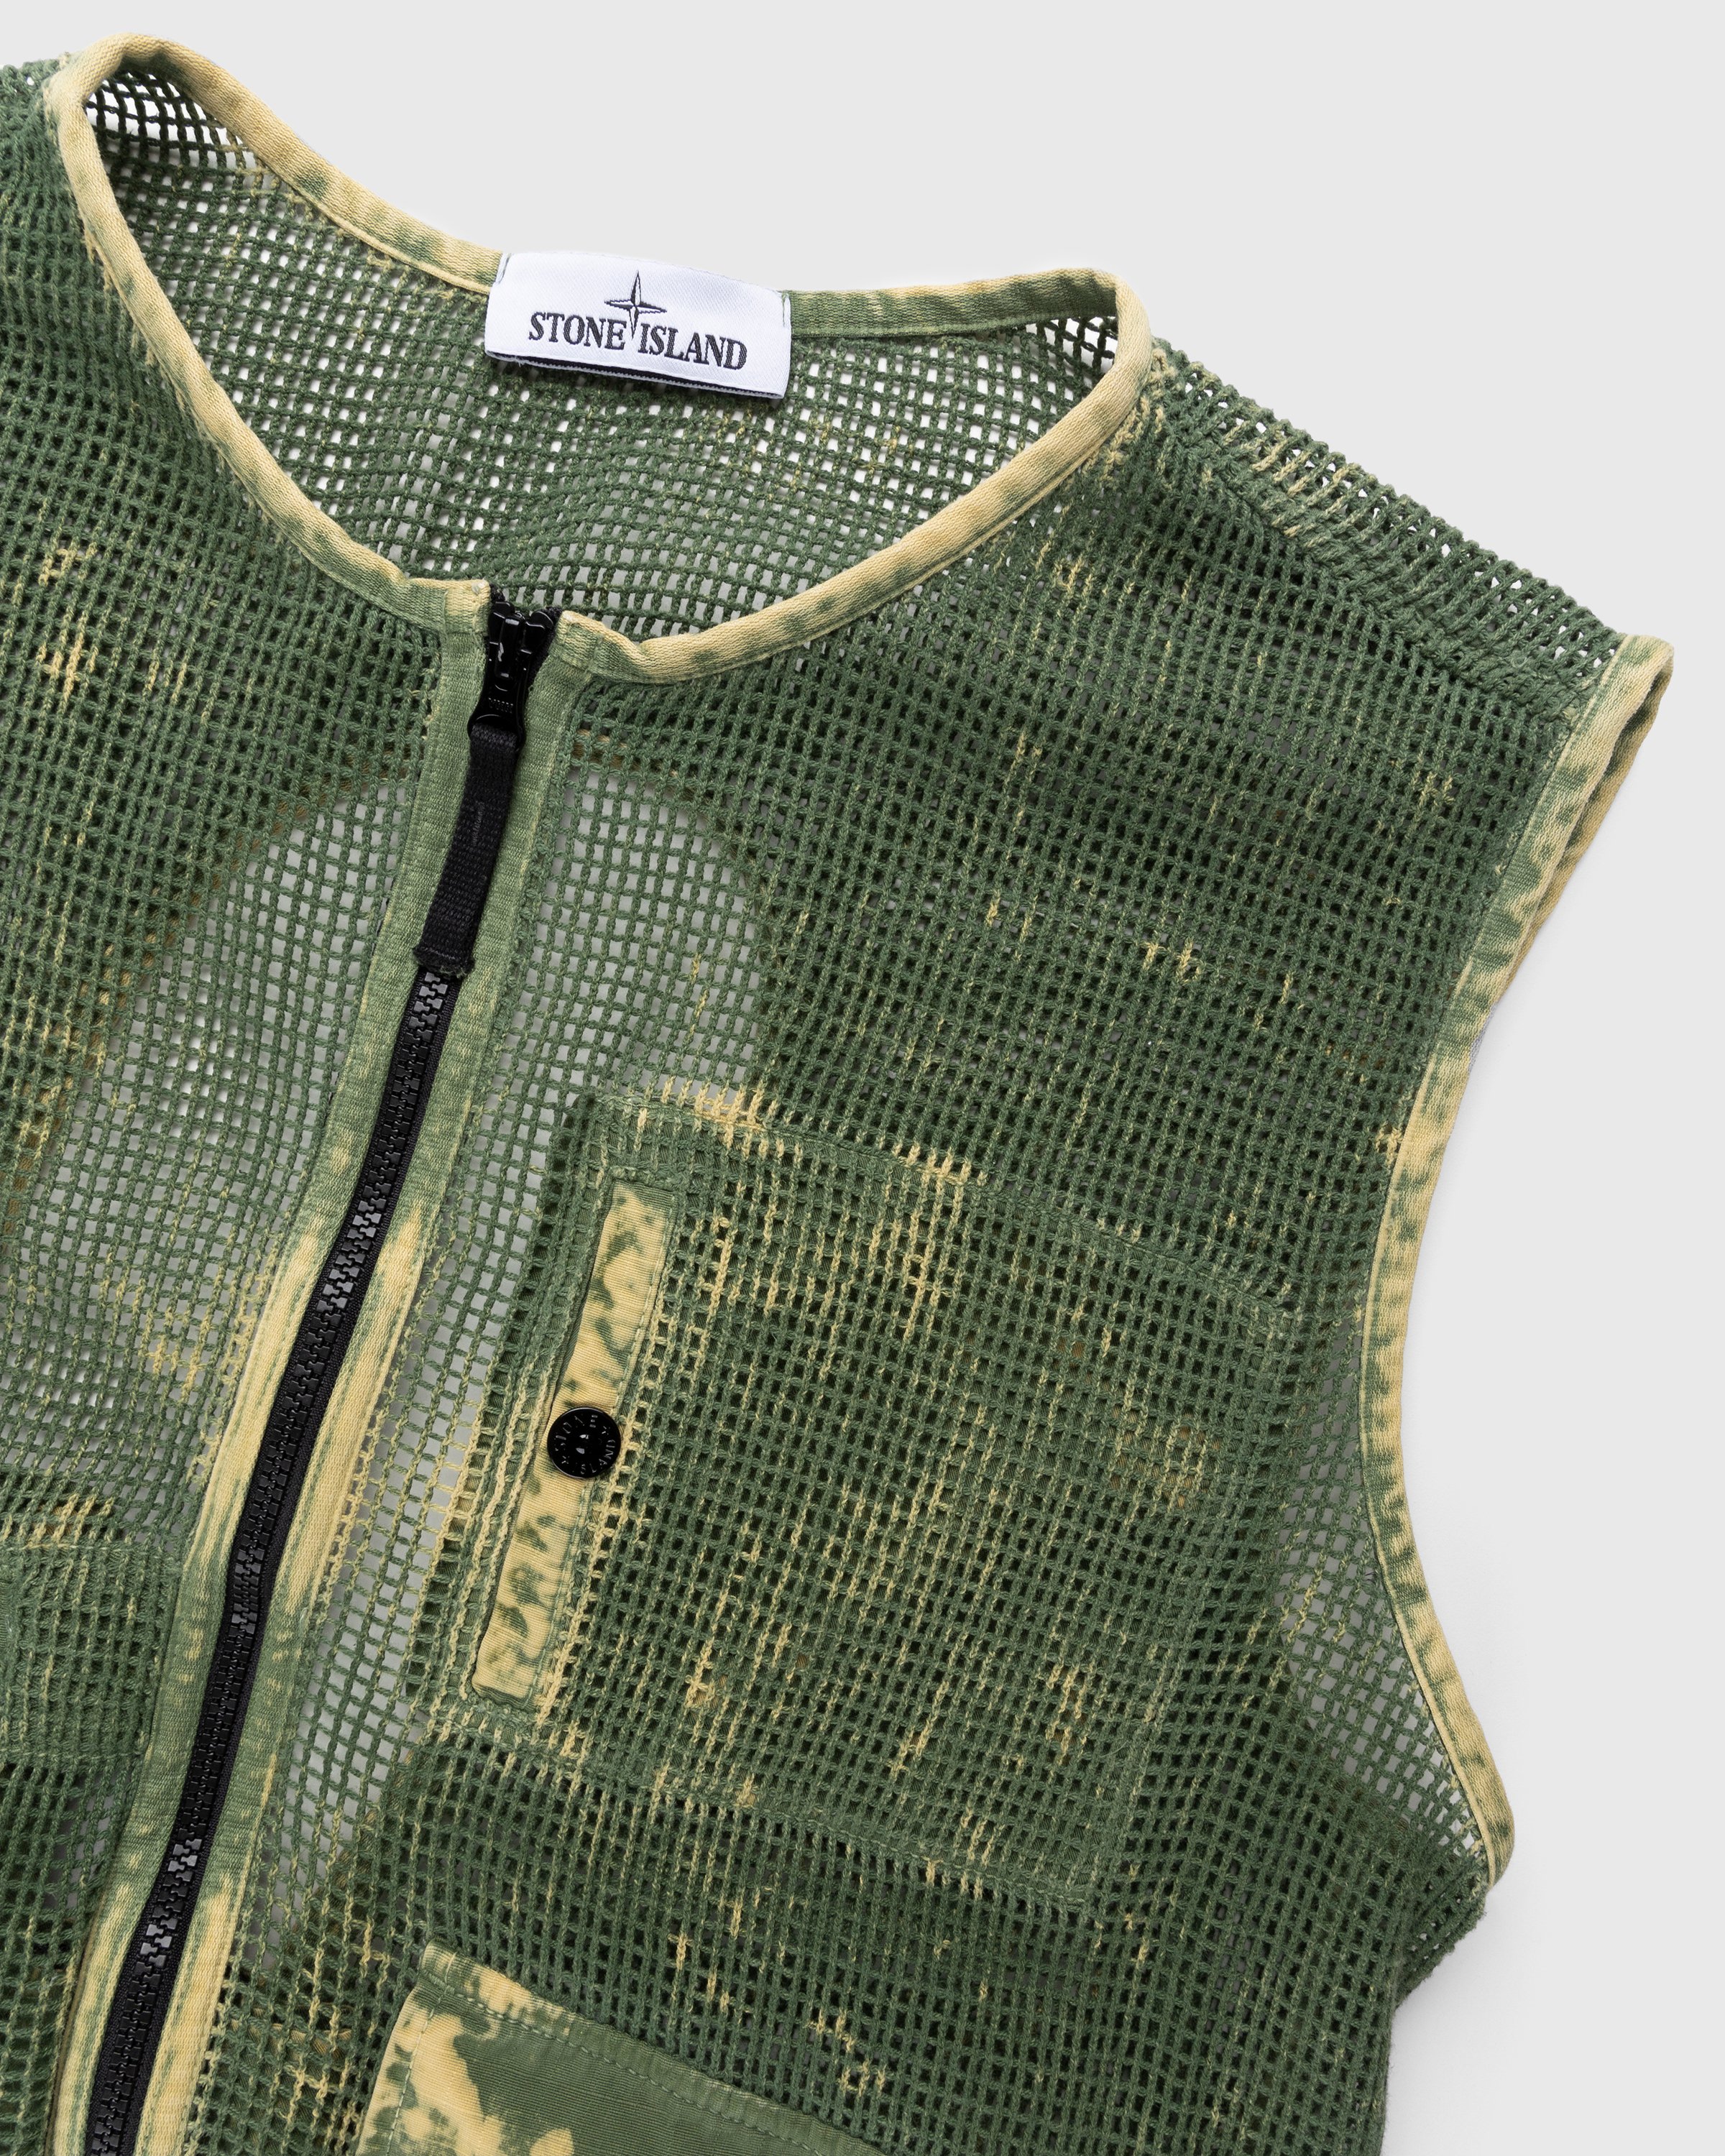 Stone Island - G0622 Garment-Dyed Cotton Mesh Vest Olive - Clothing - Green - Image 3